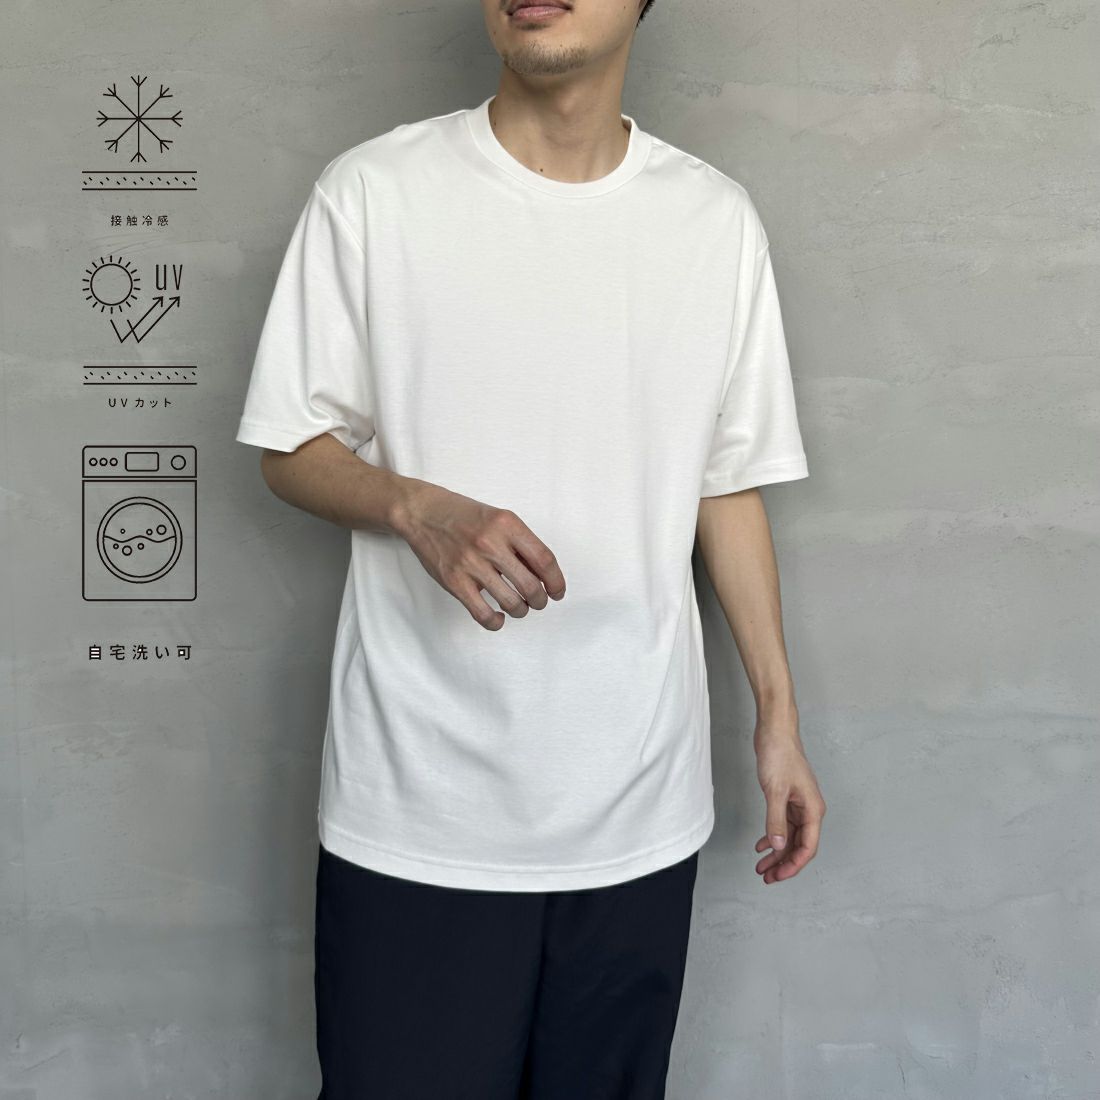 Jeans Factory Clothes [ジーンズファクトリークローズ] シルケットスムーススローブネックTシャツ [24238069]